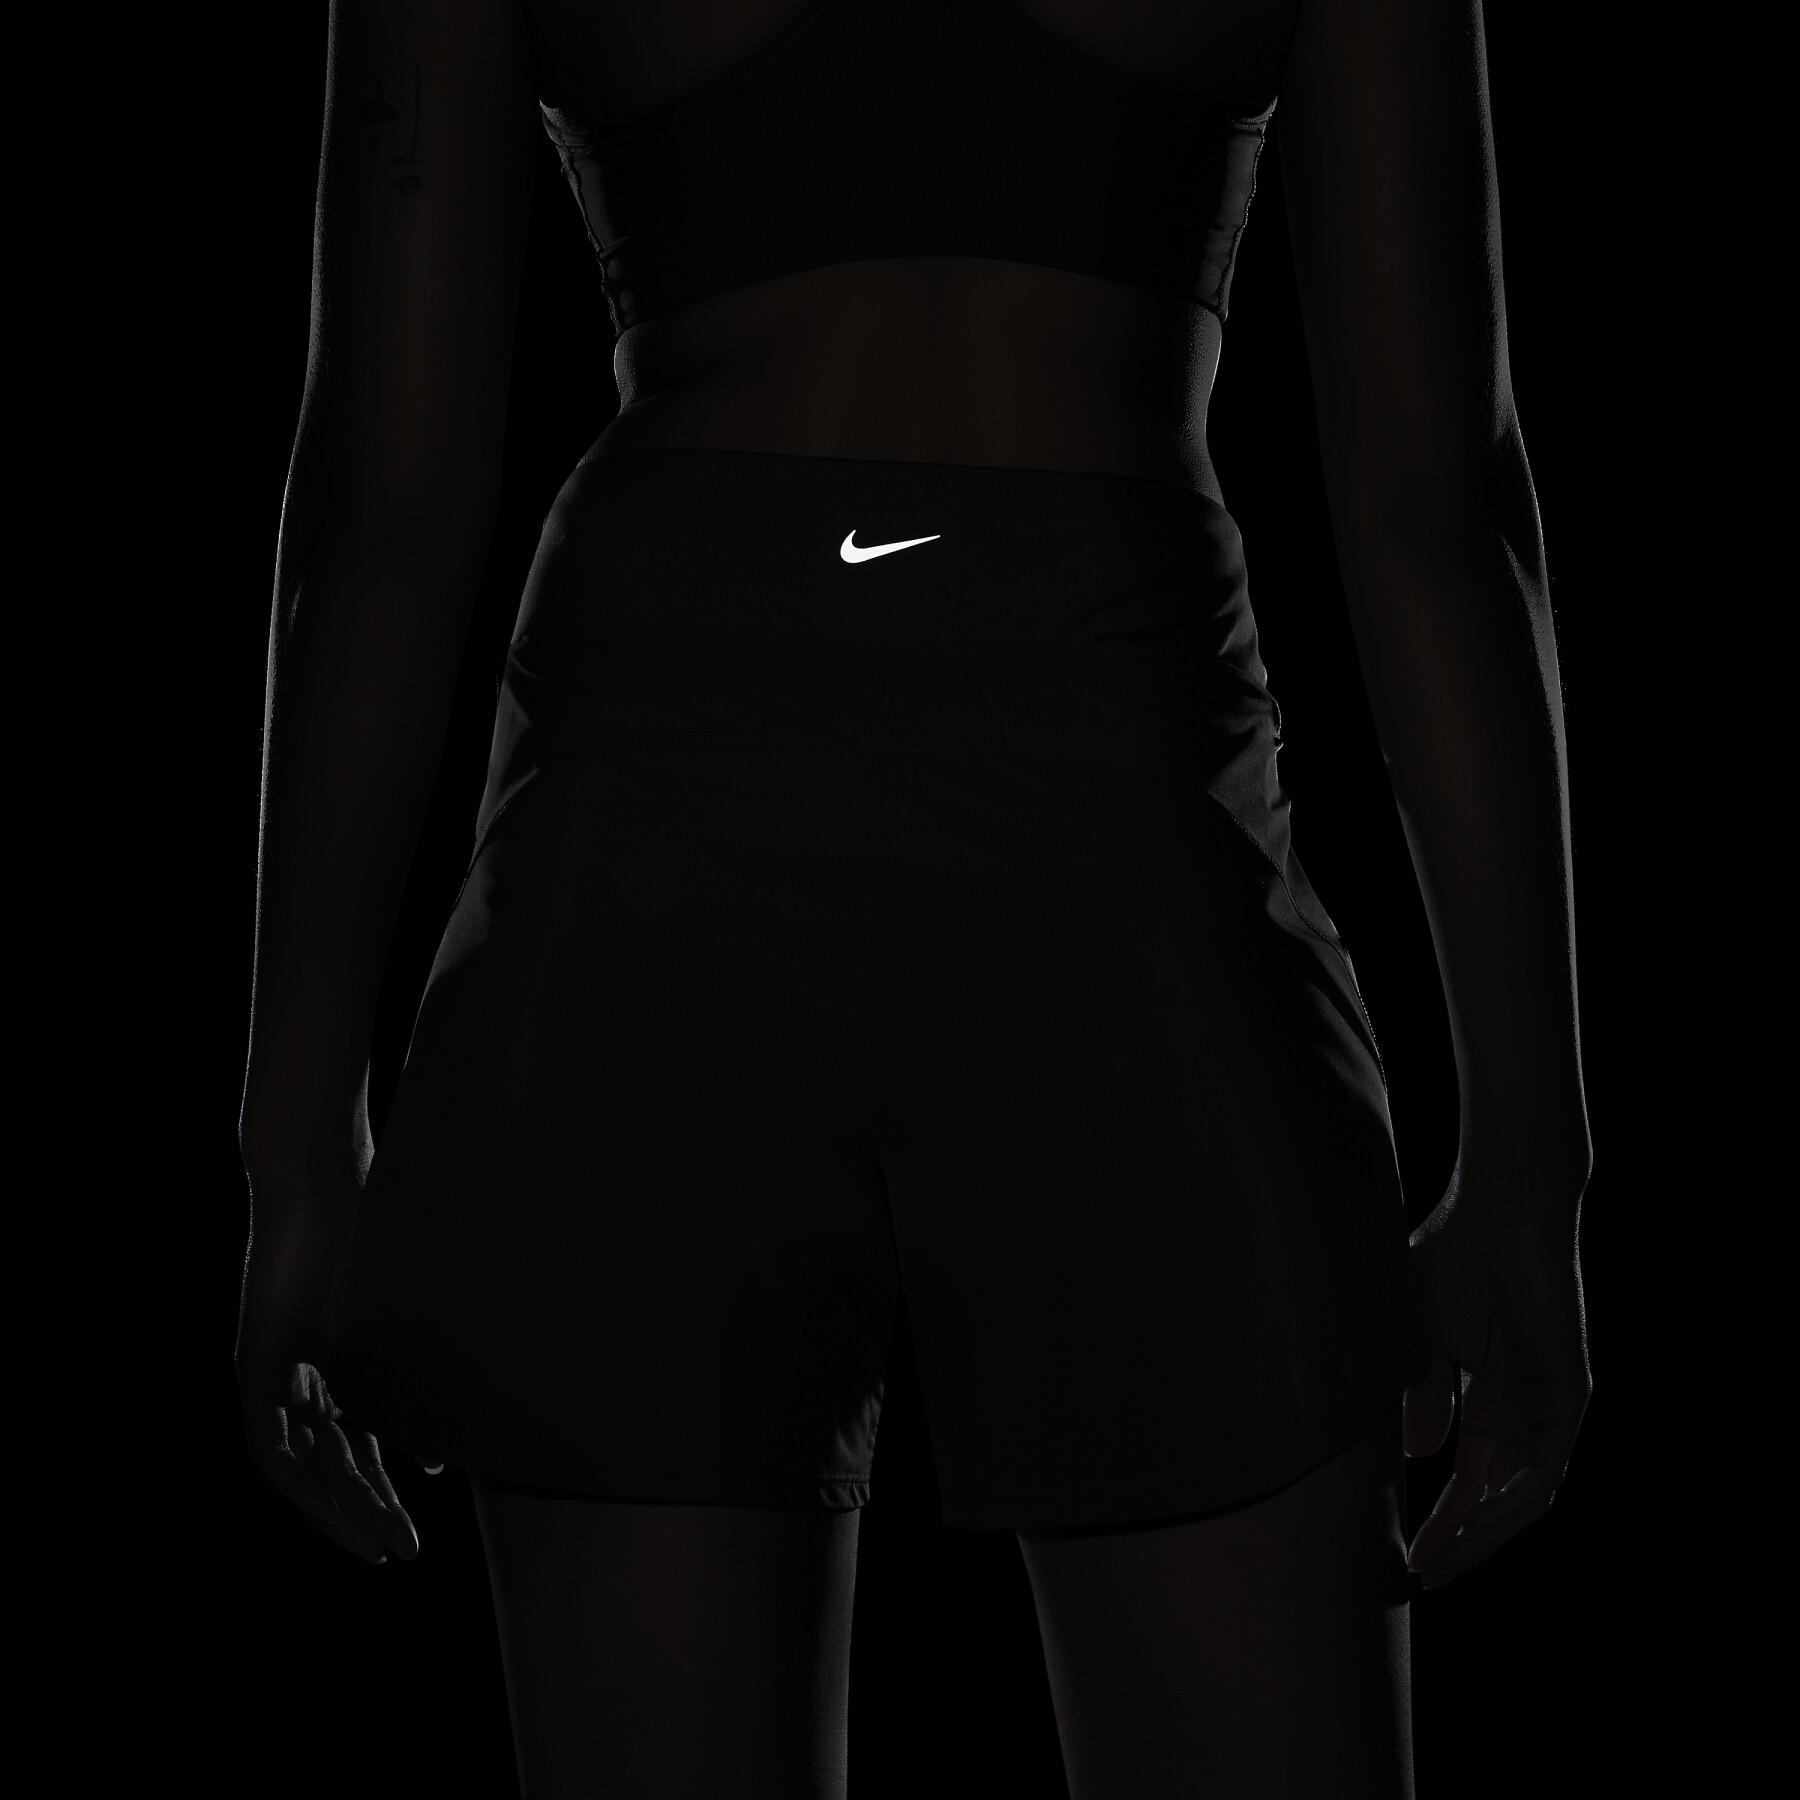 Calções para mulheres Nike Bliss Dri-Fit MR 5 " BR